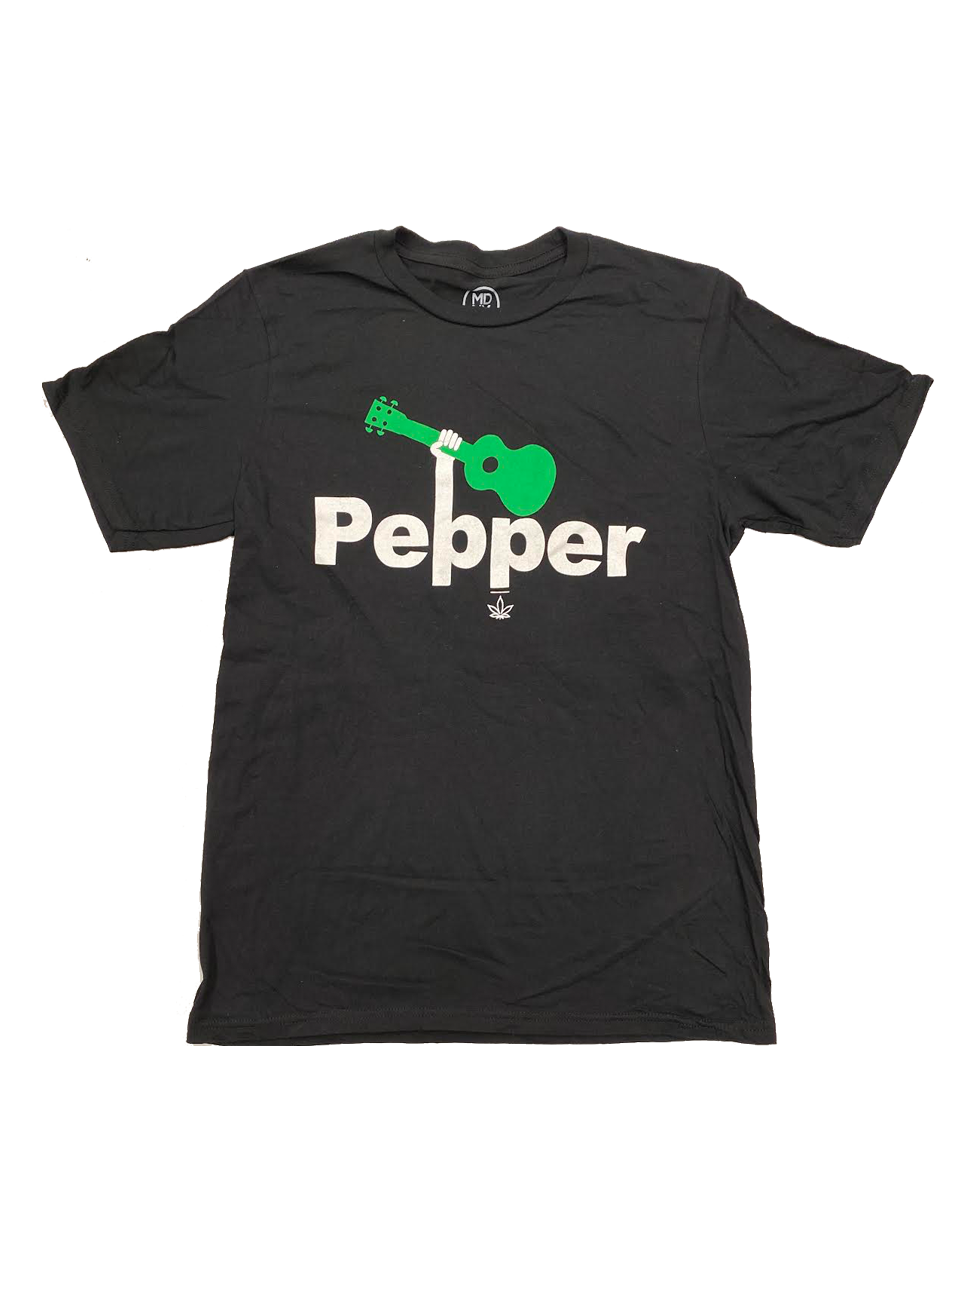 Pepper - Guitar on Black Tee